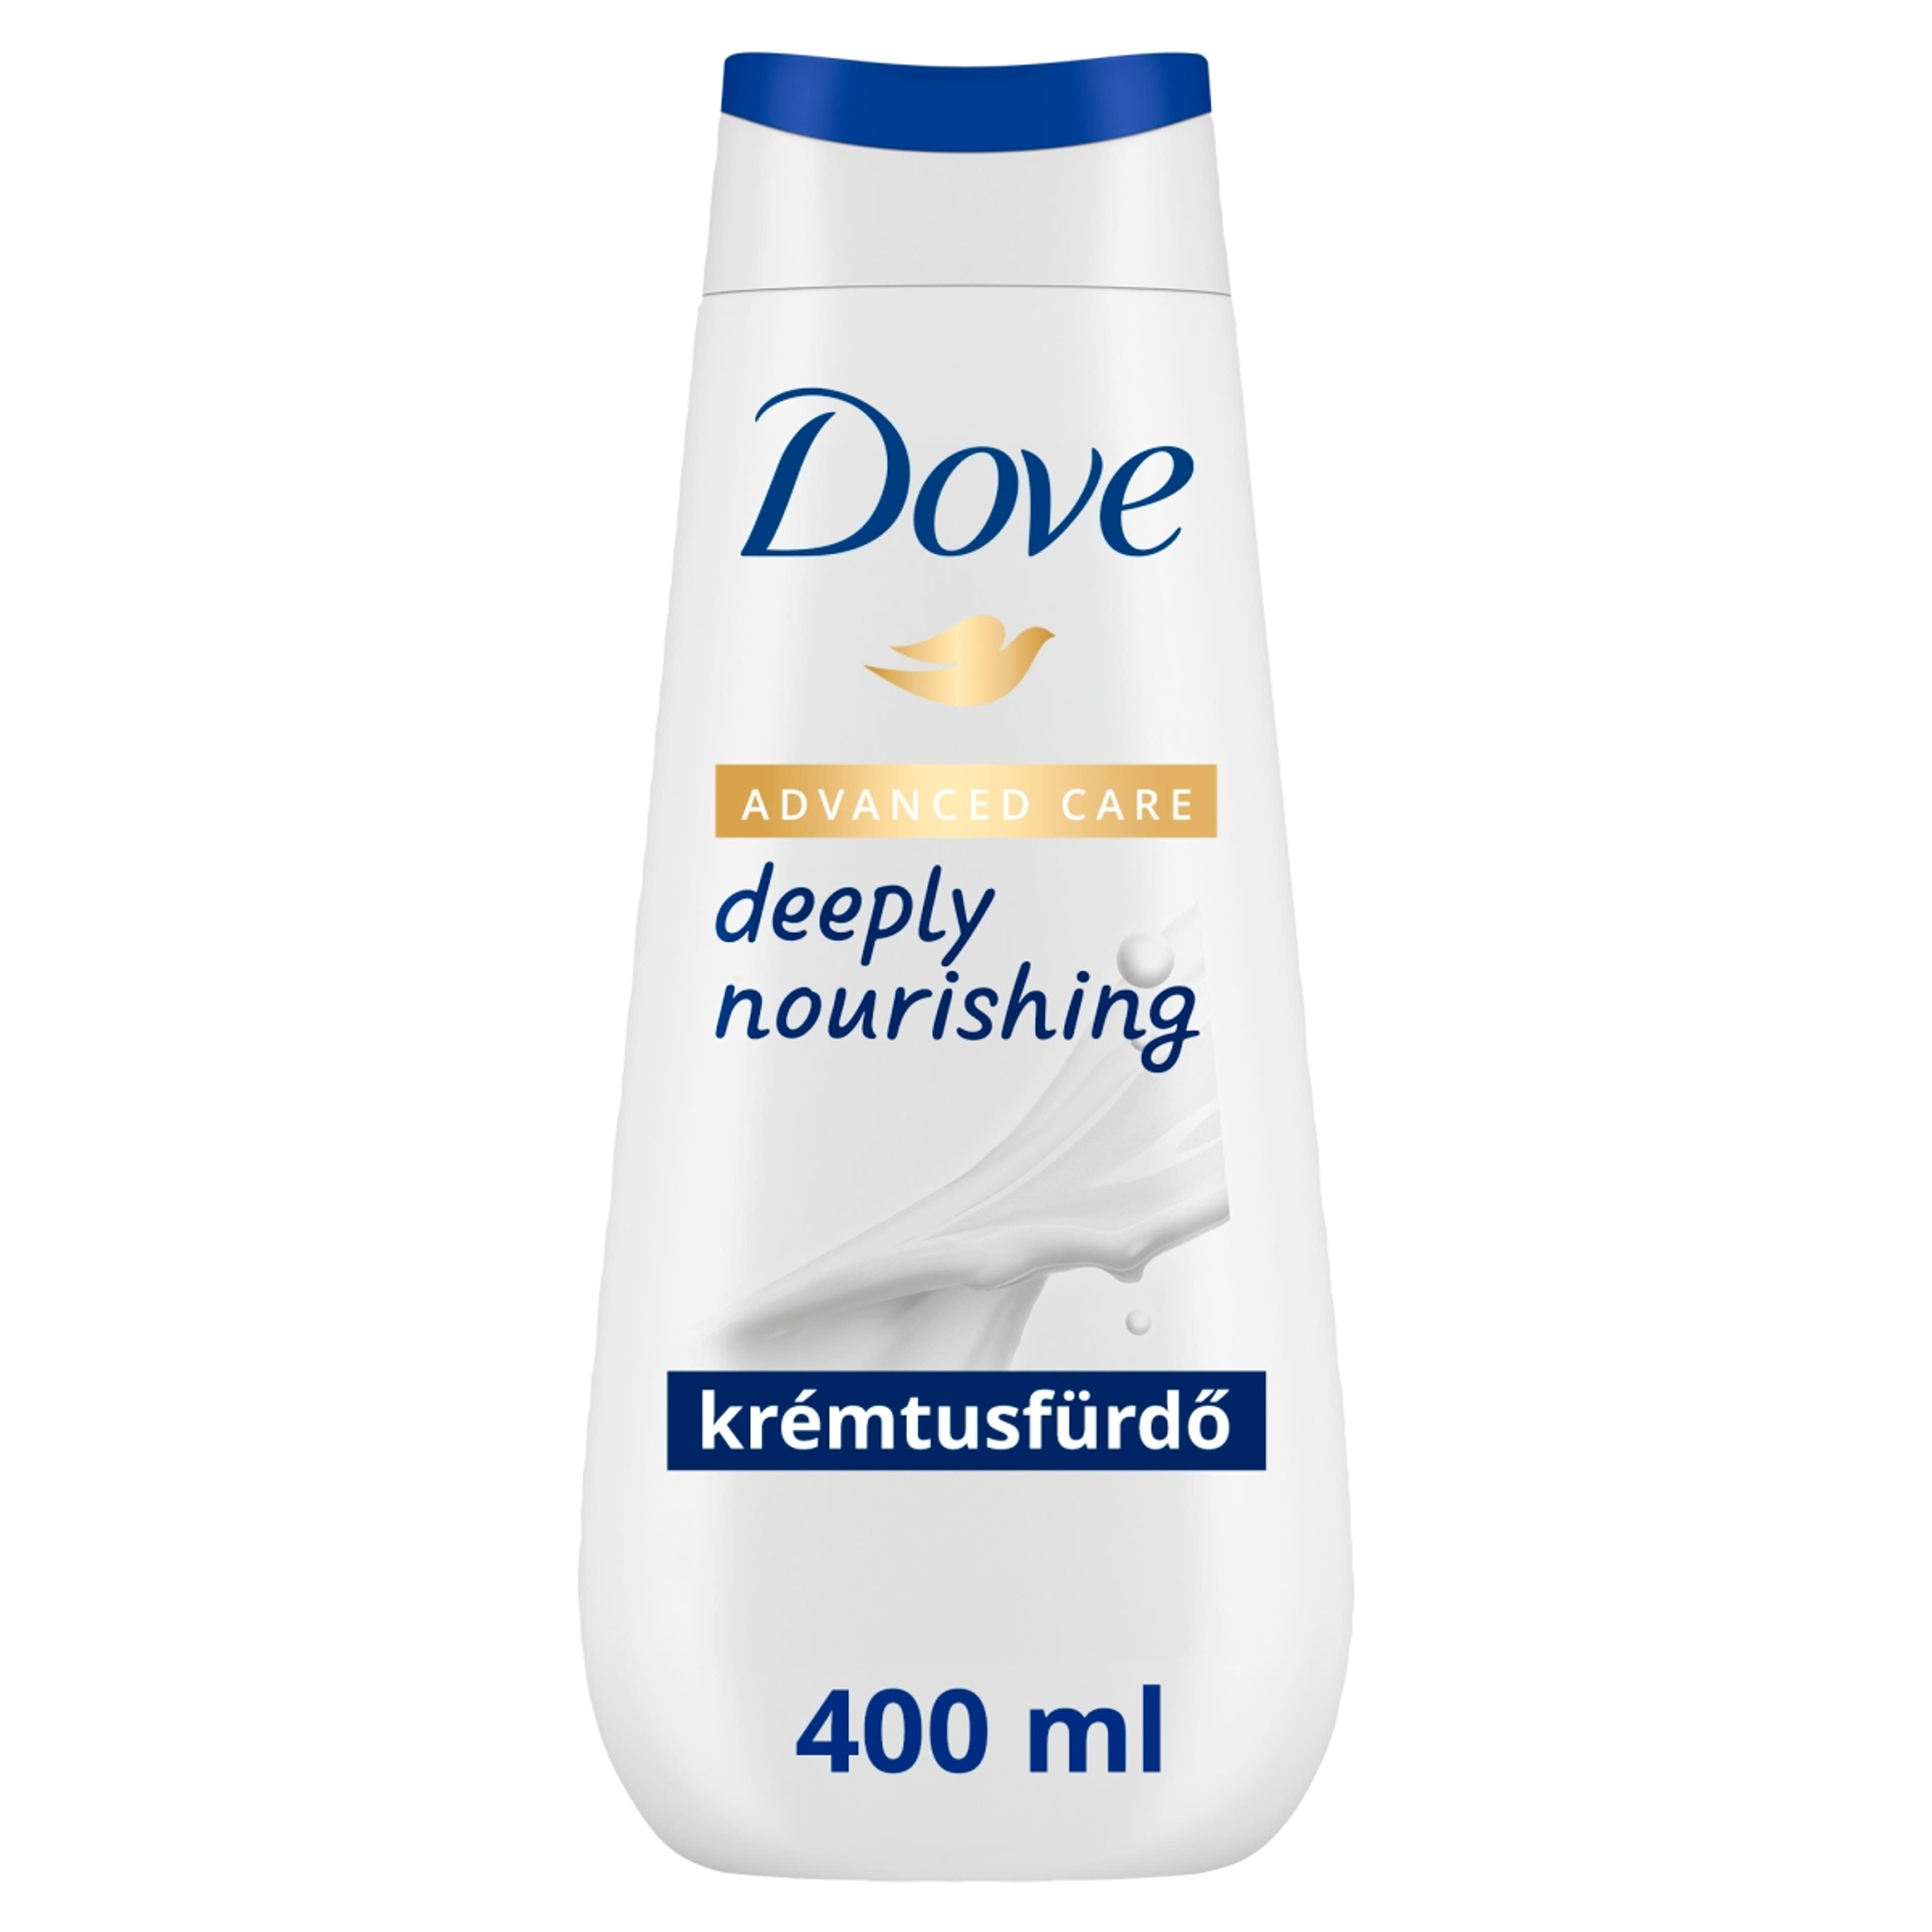 Dove Advanced Care Deeply Nourishing krémtusfürdő - 400 ml-2